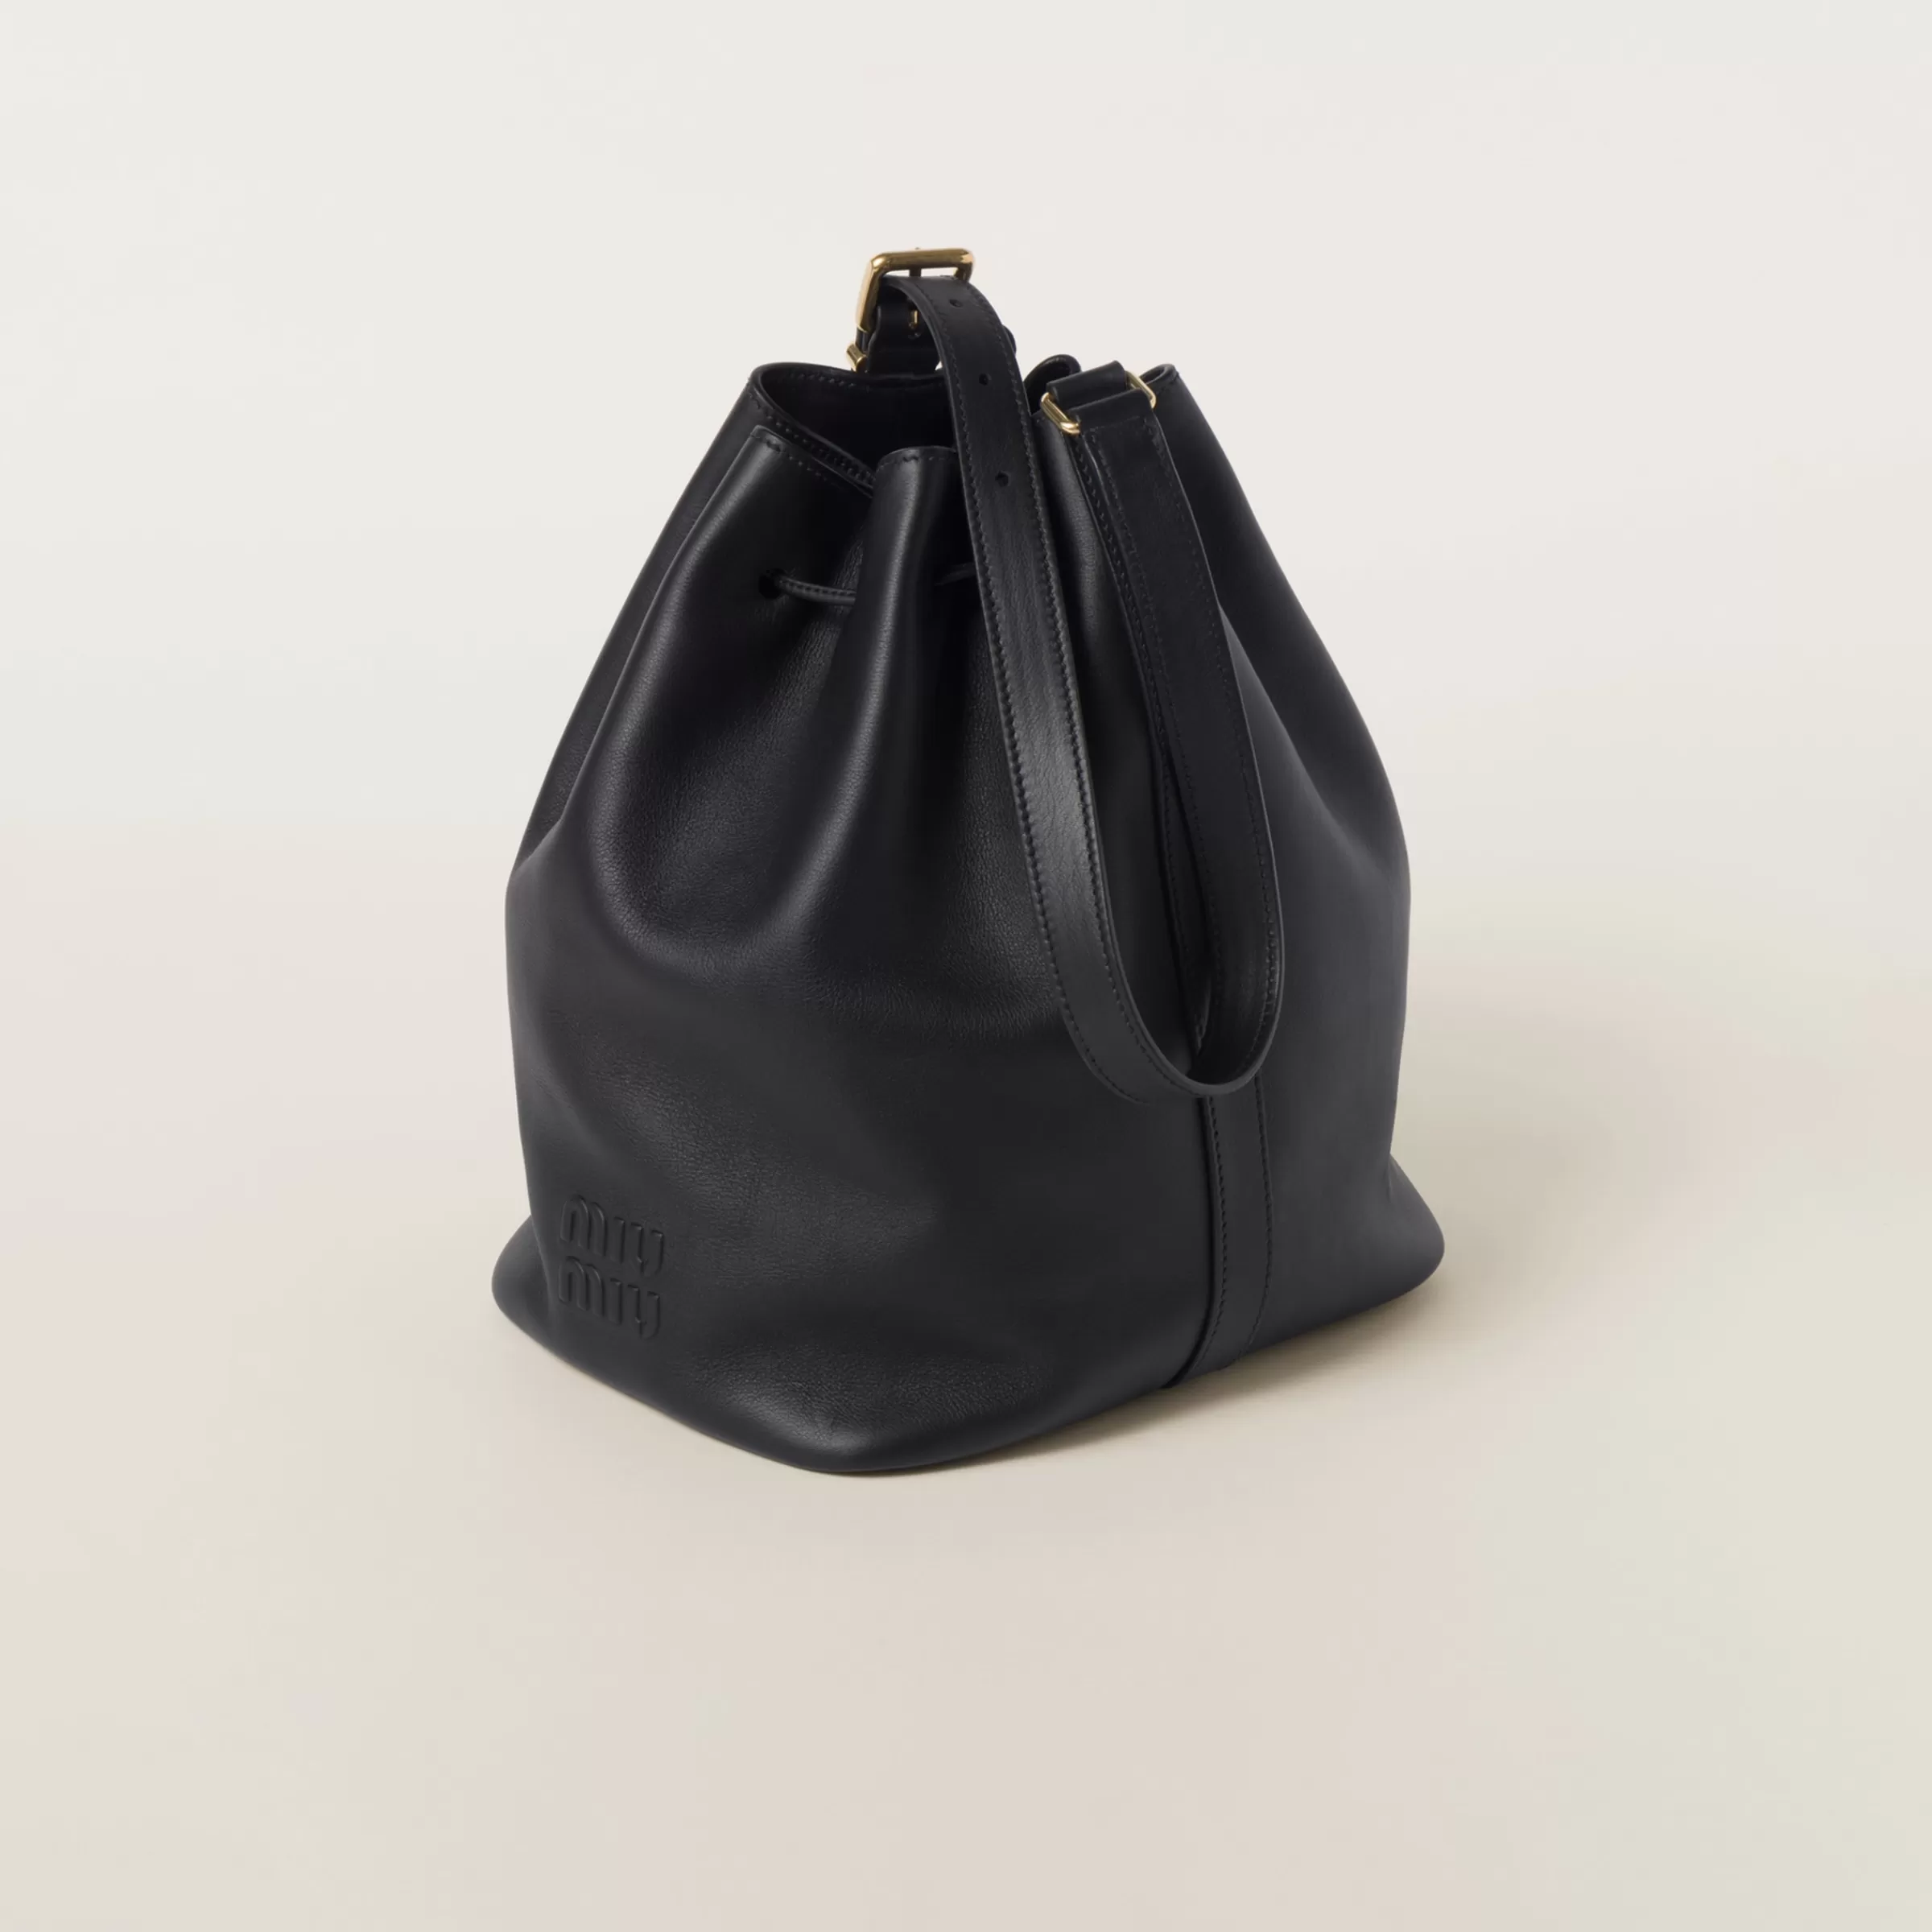 Miu Miu Leather Bucket Bag |